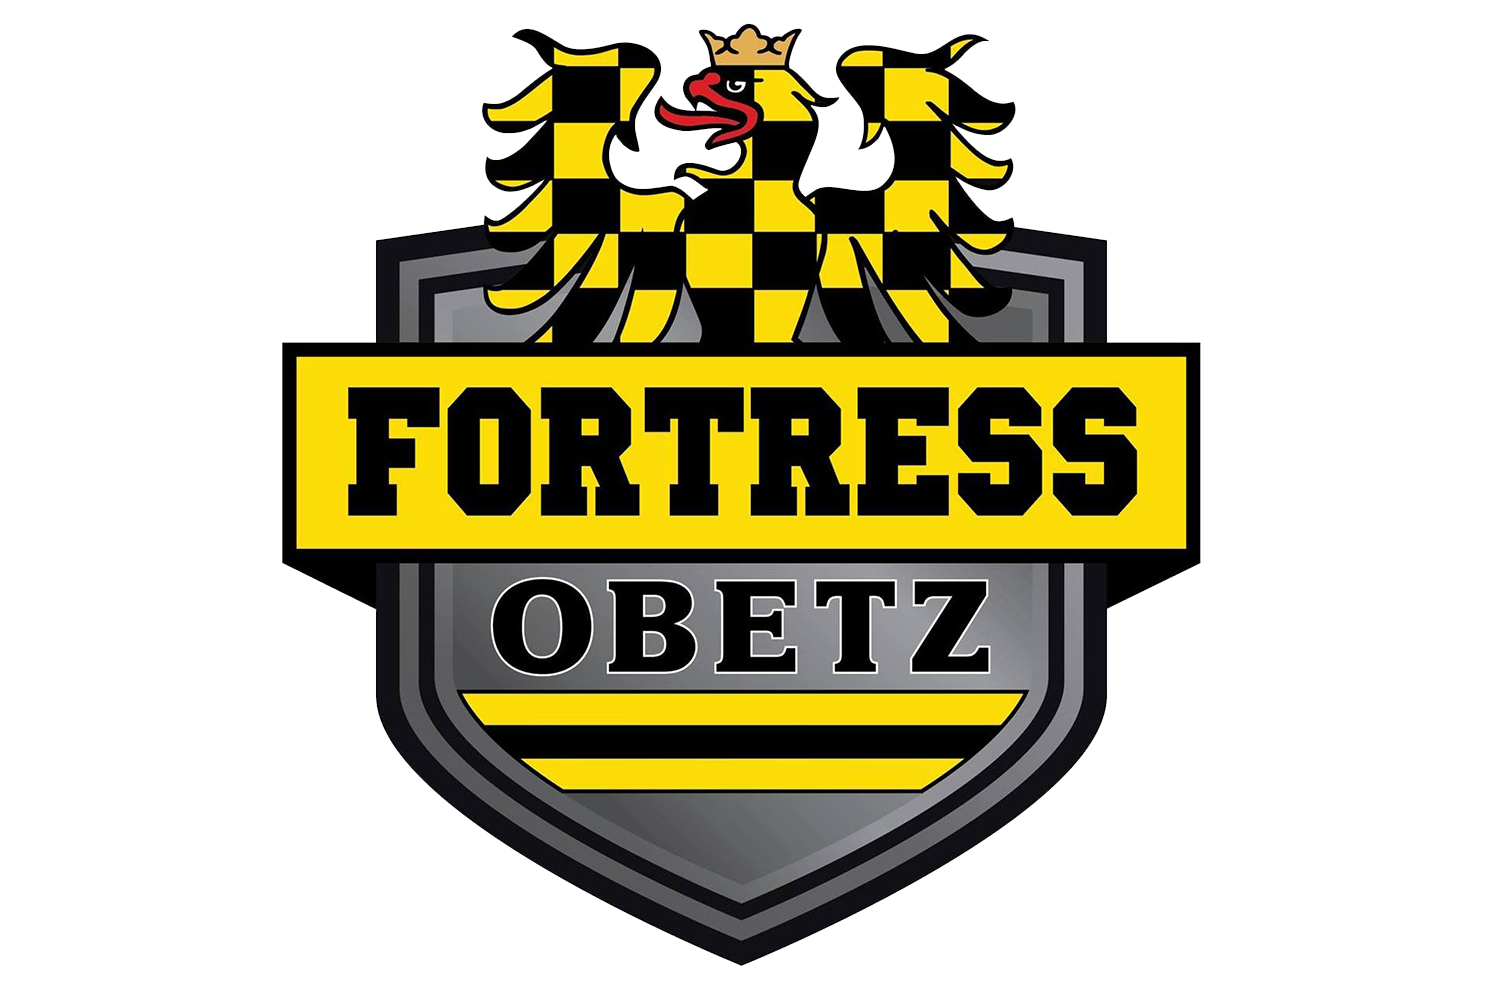 fortress obetz logo the ohio eggfest sponsor